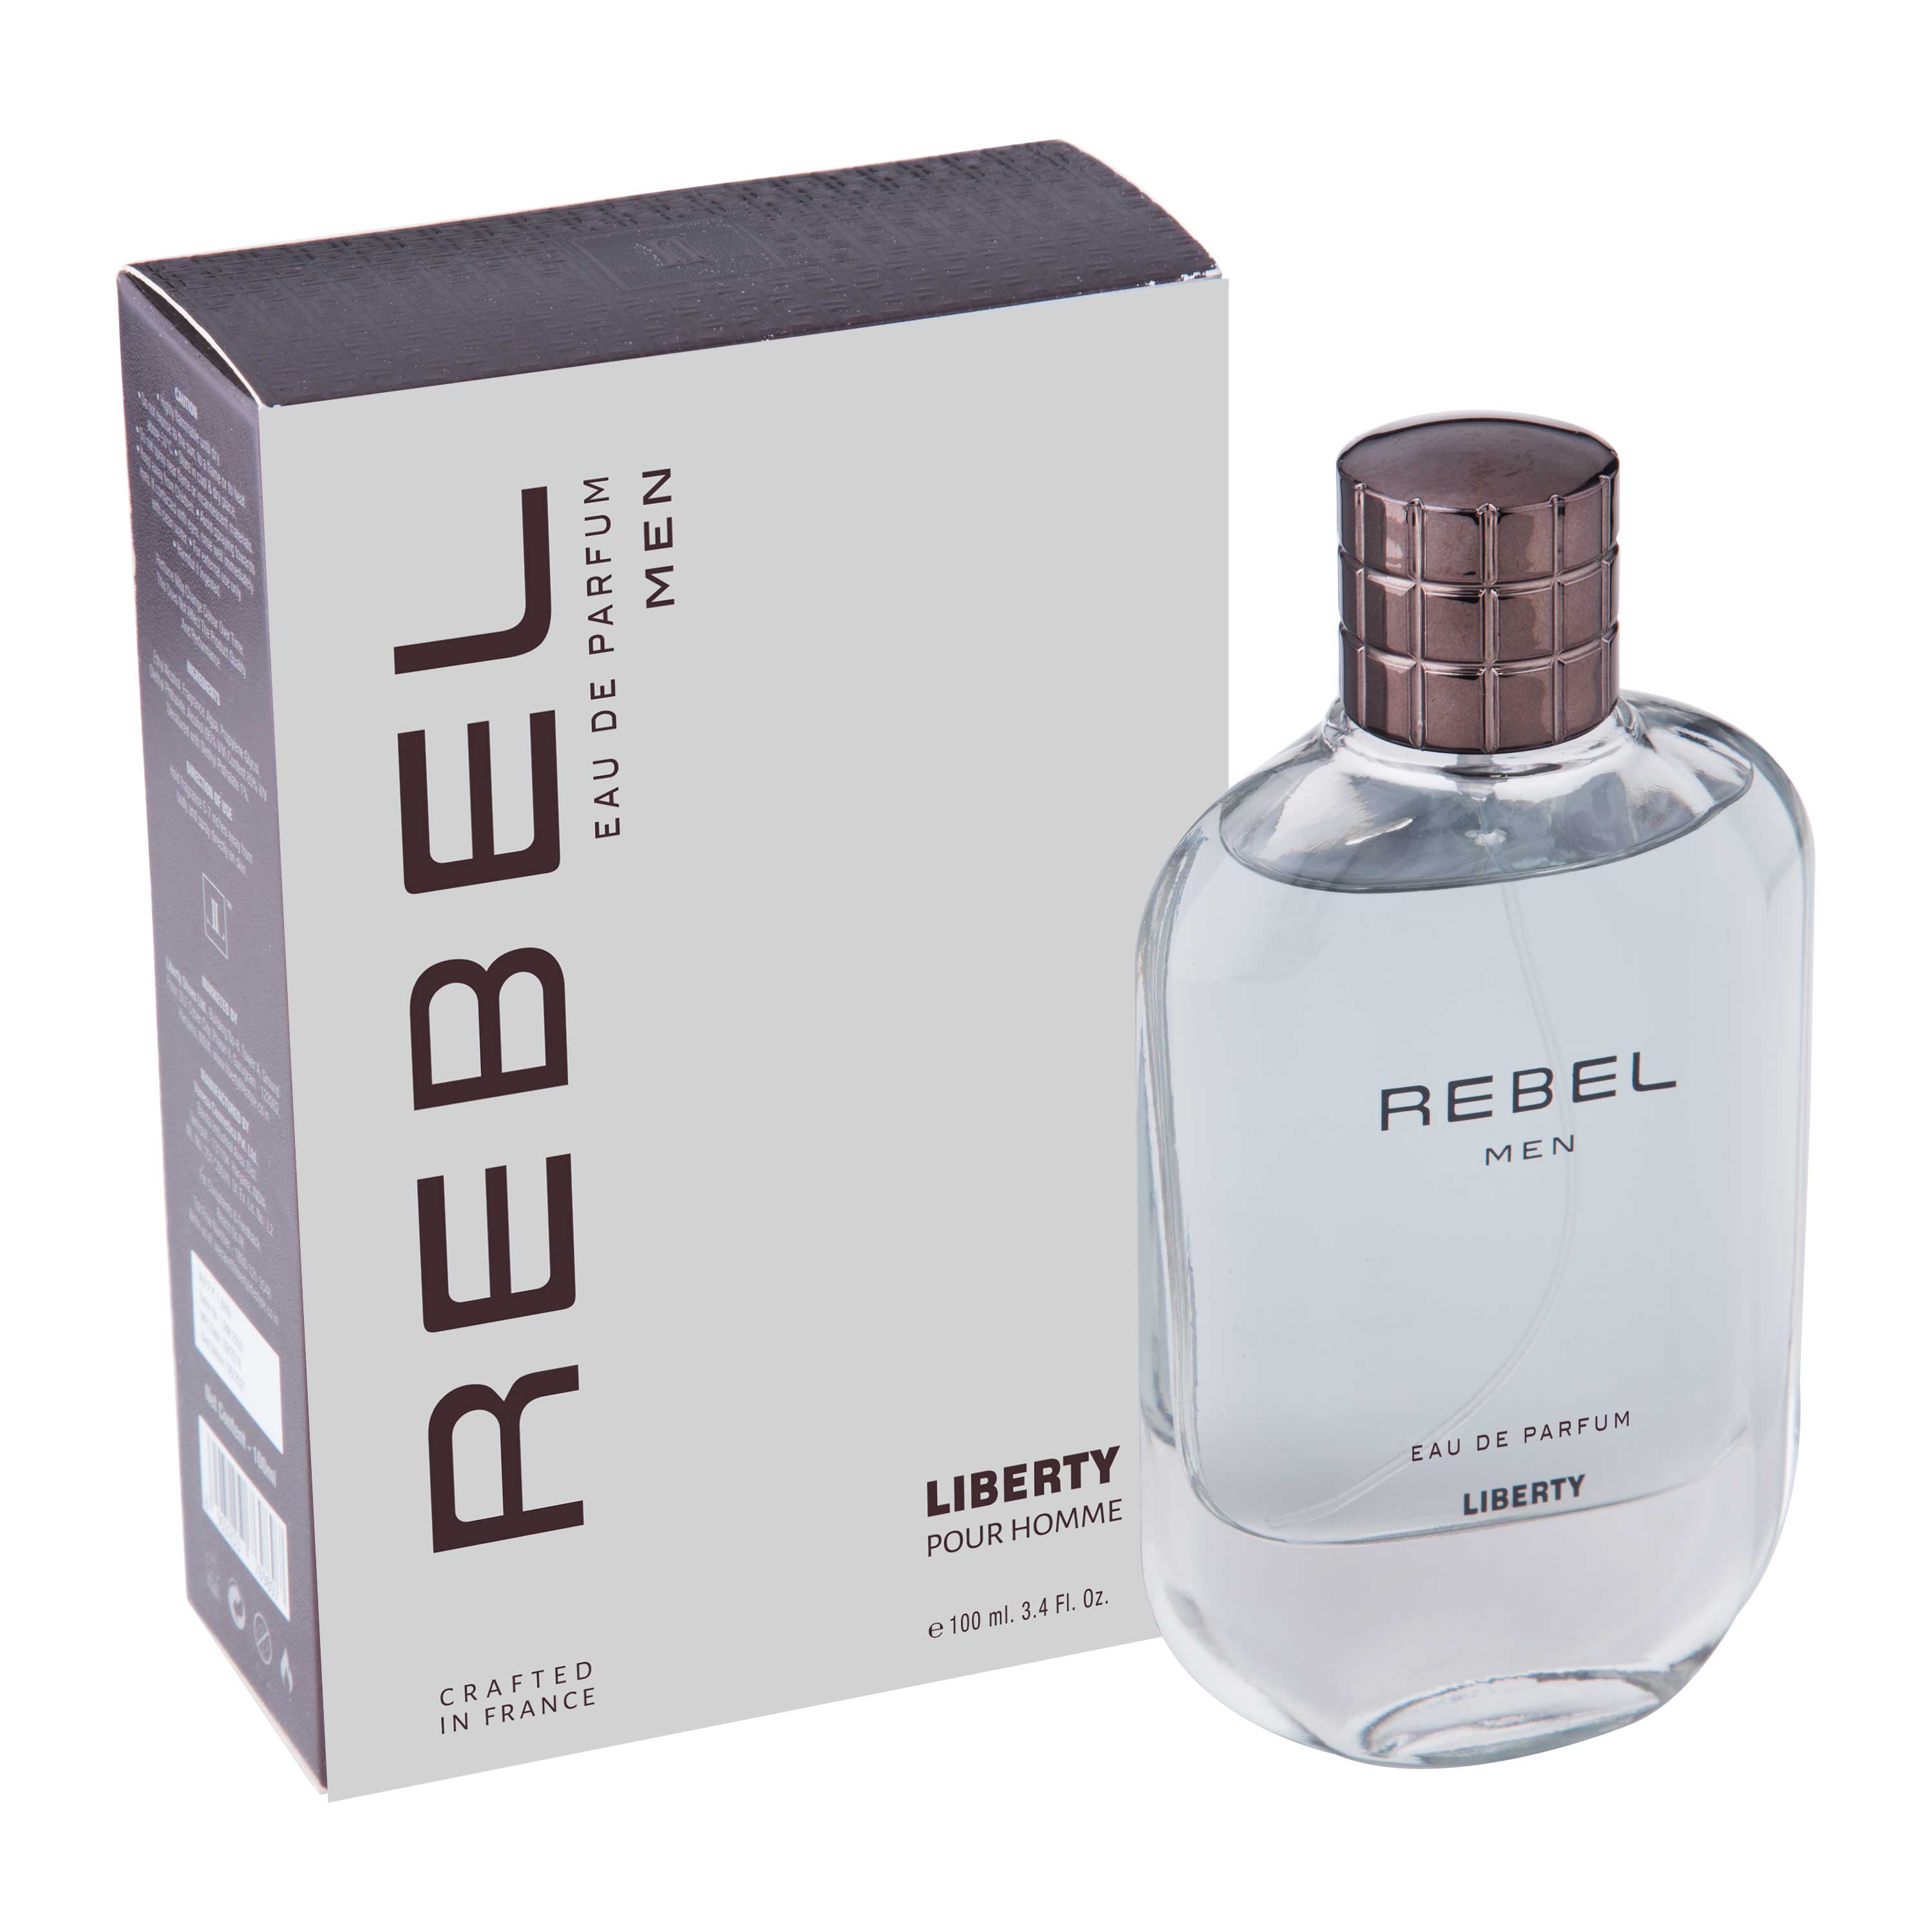 REBEL MEN - Eau De Perfume from LIBERTY LIFESTYLE